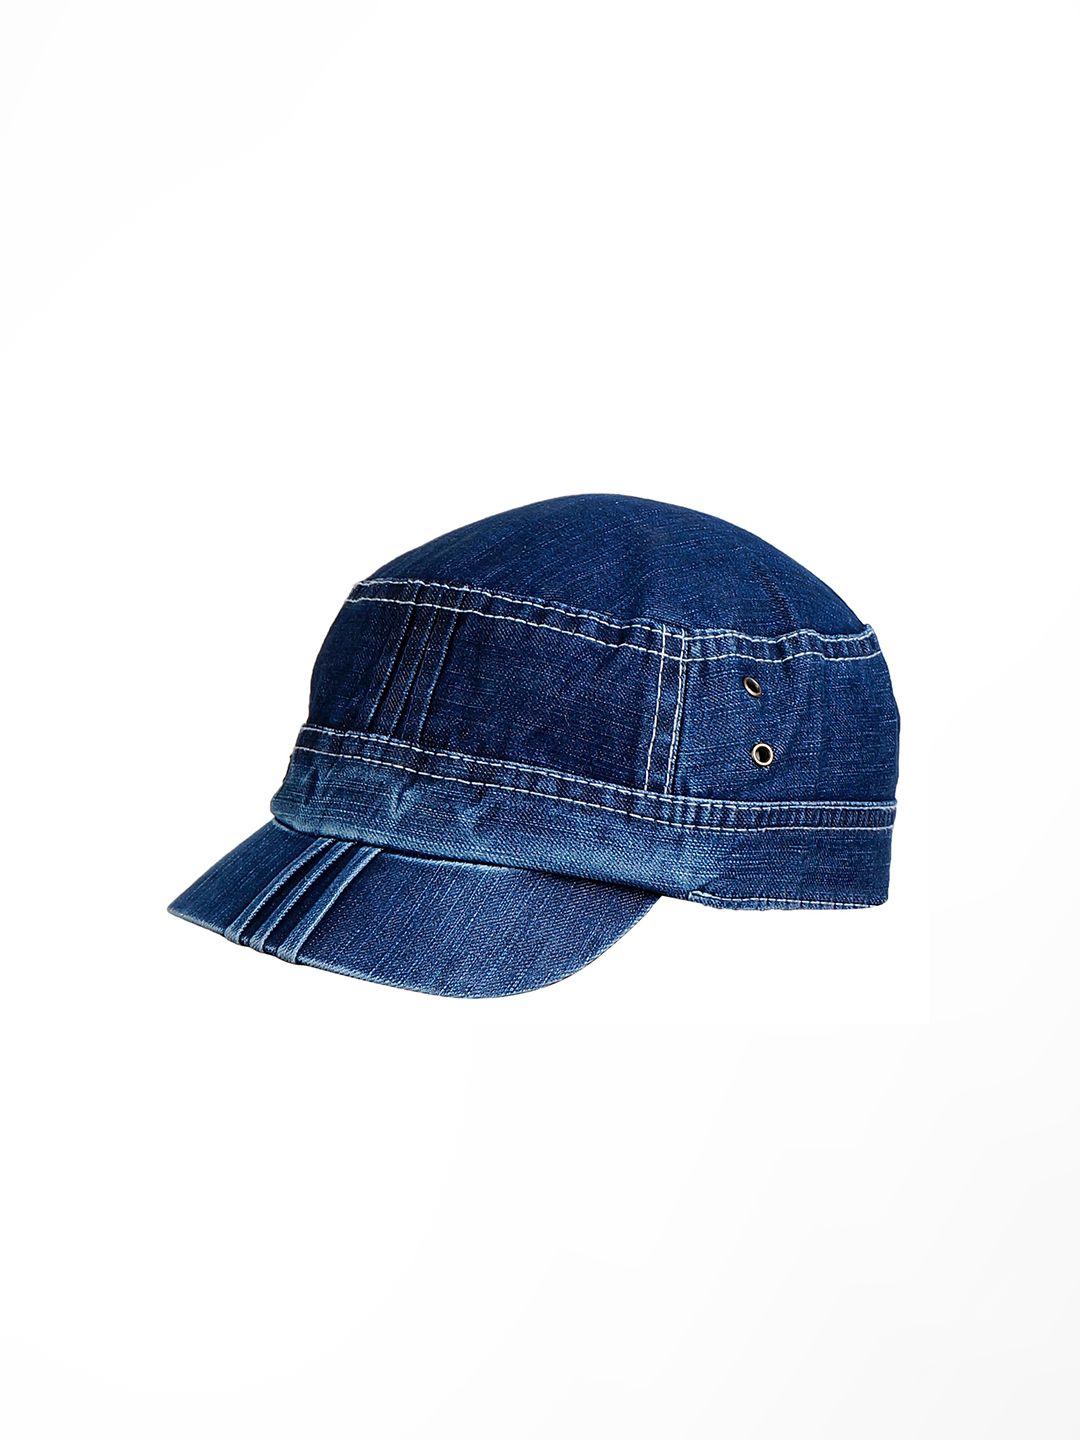 zacharias unisex blue baseball cap